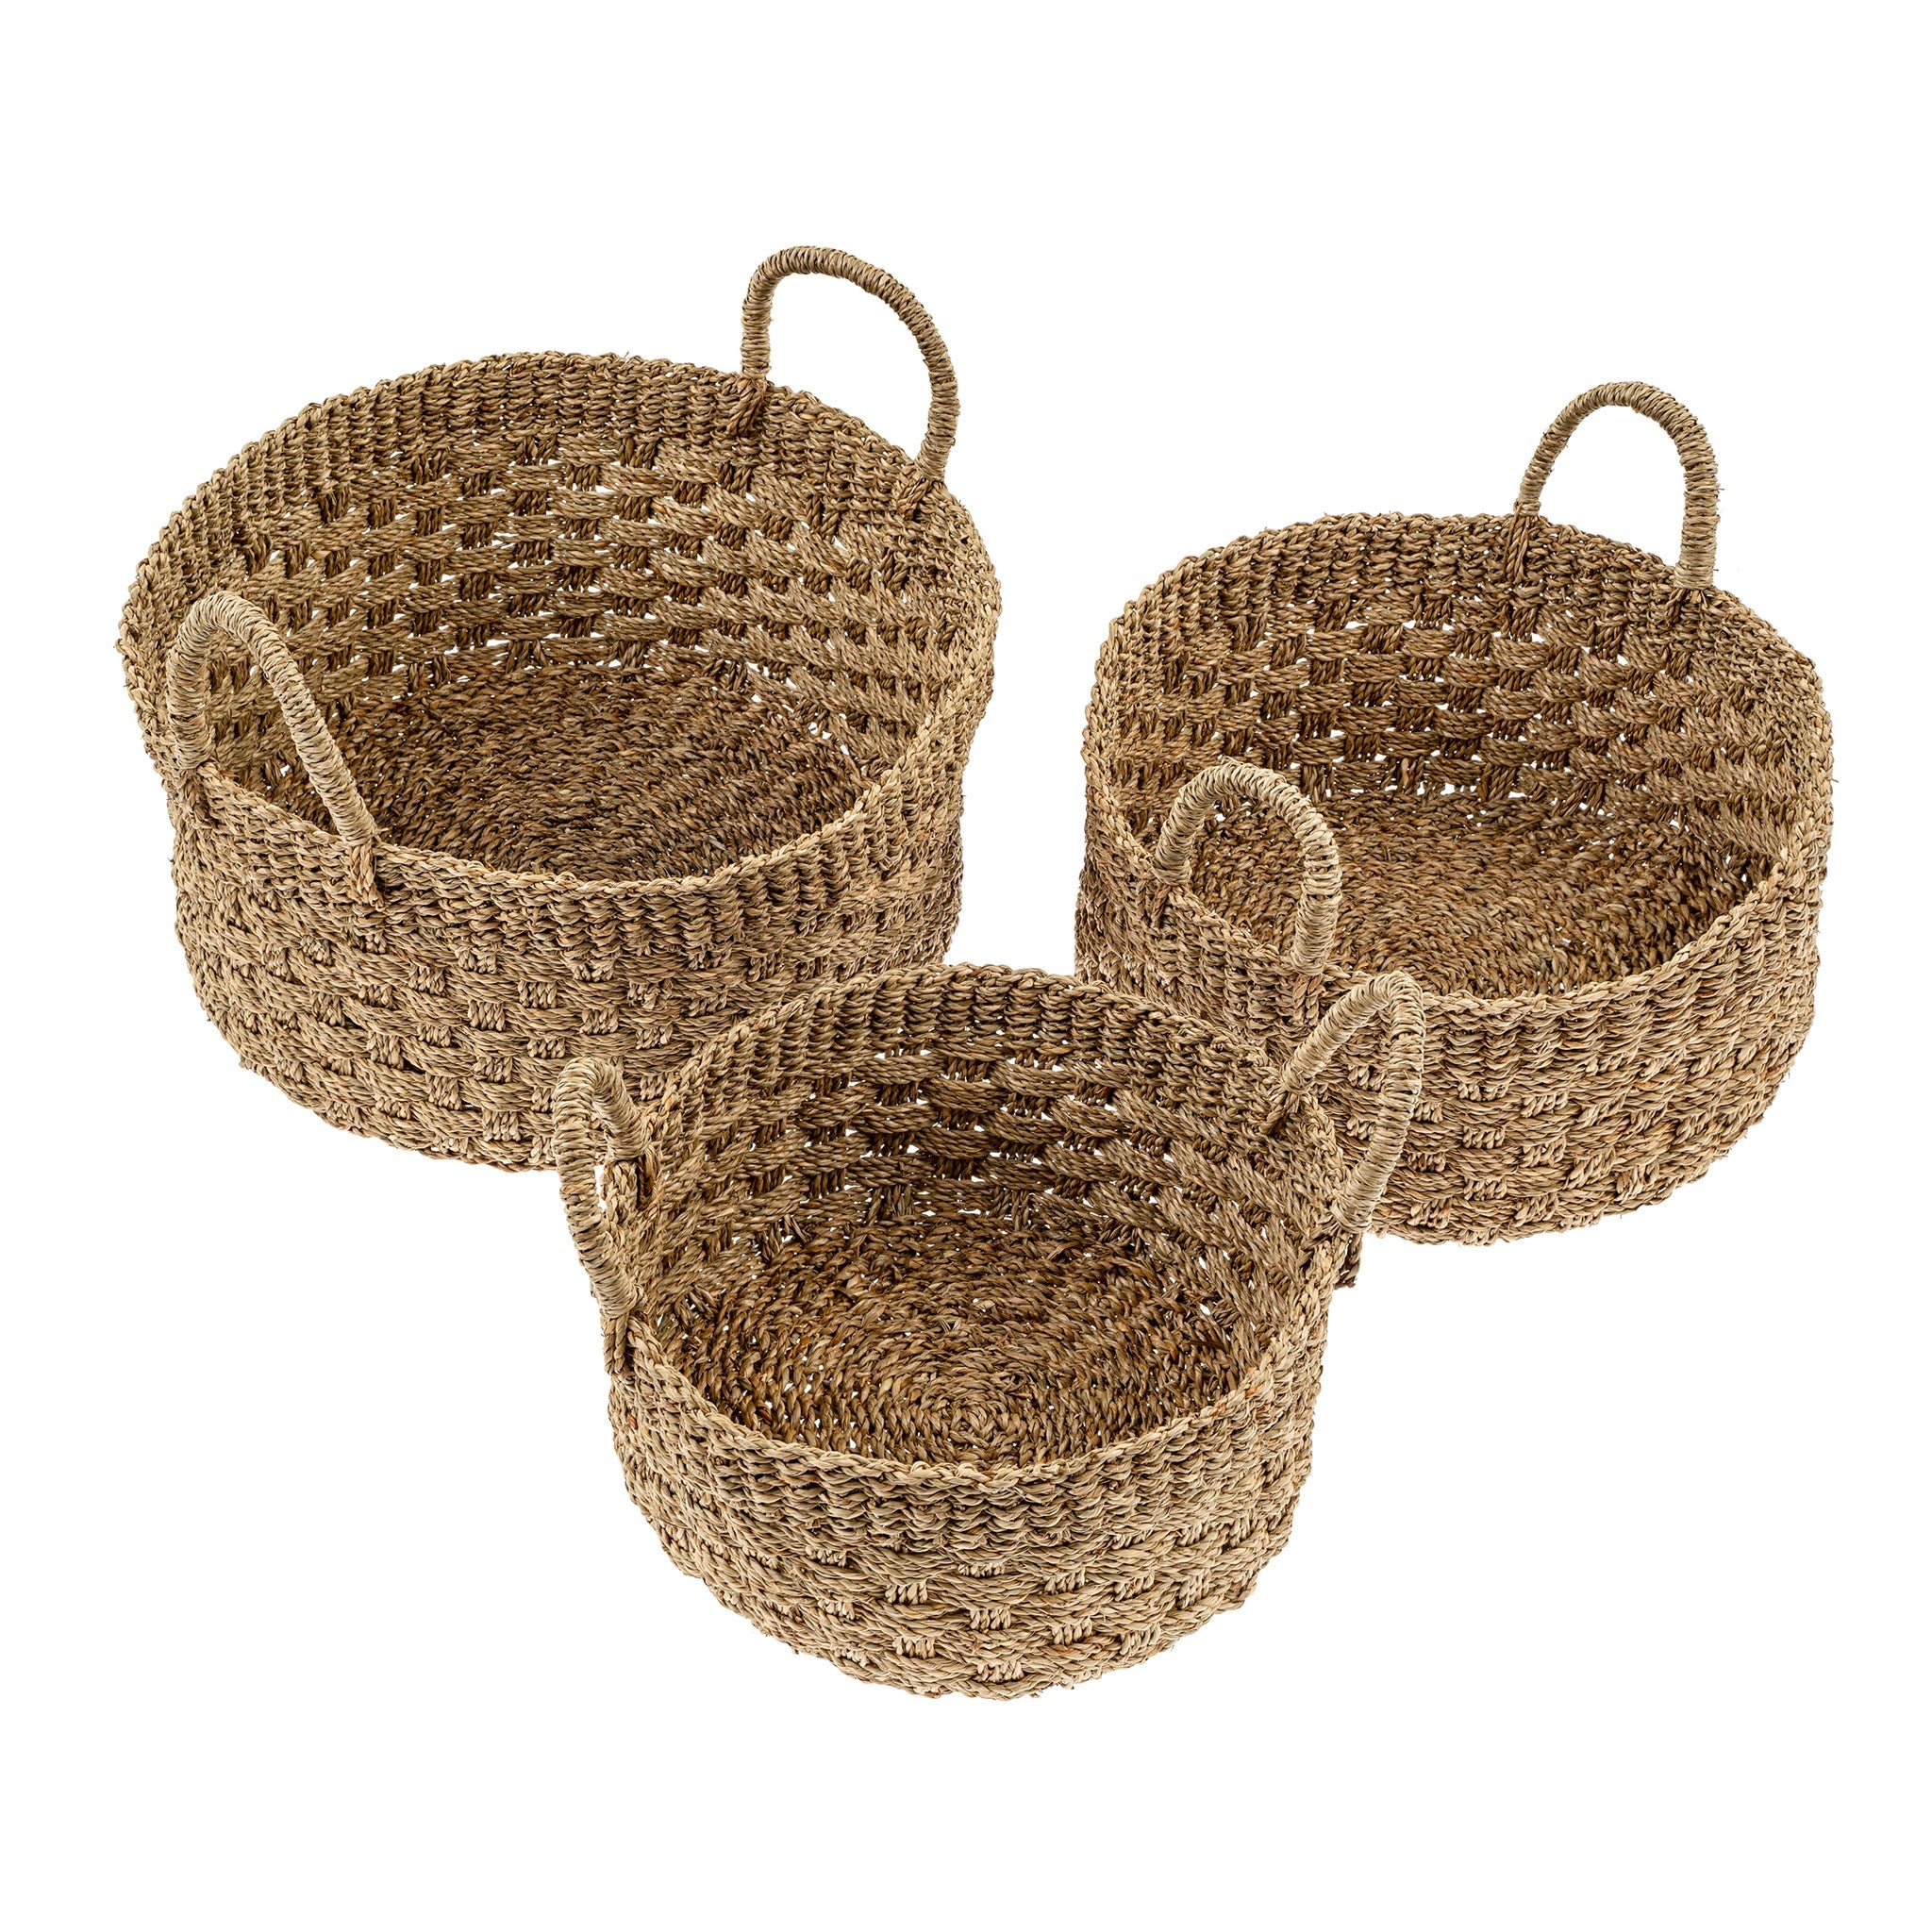 Bimini Baskets Round - Set of 3